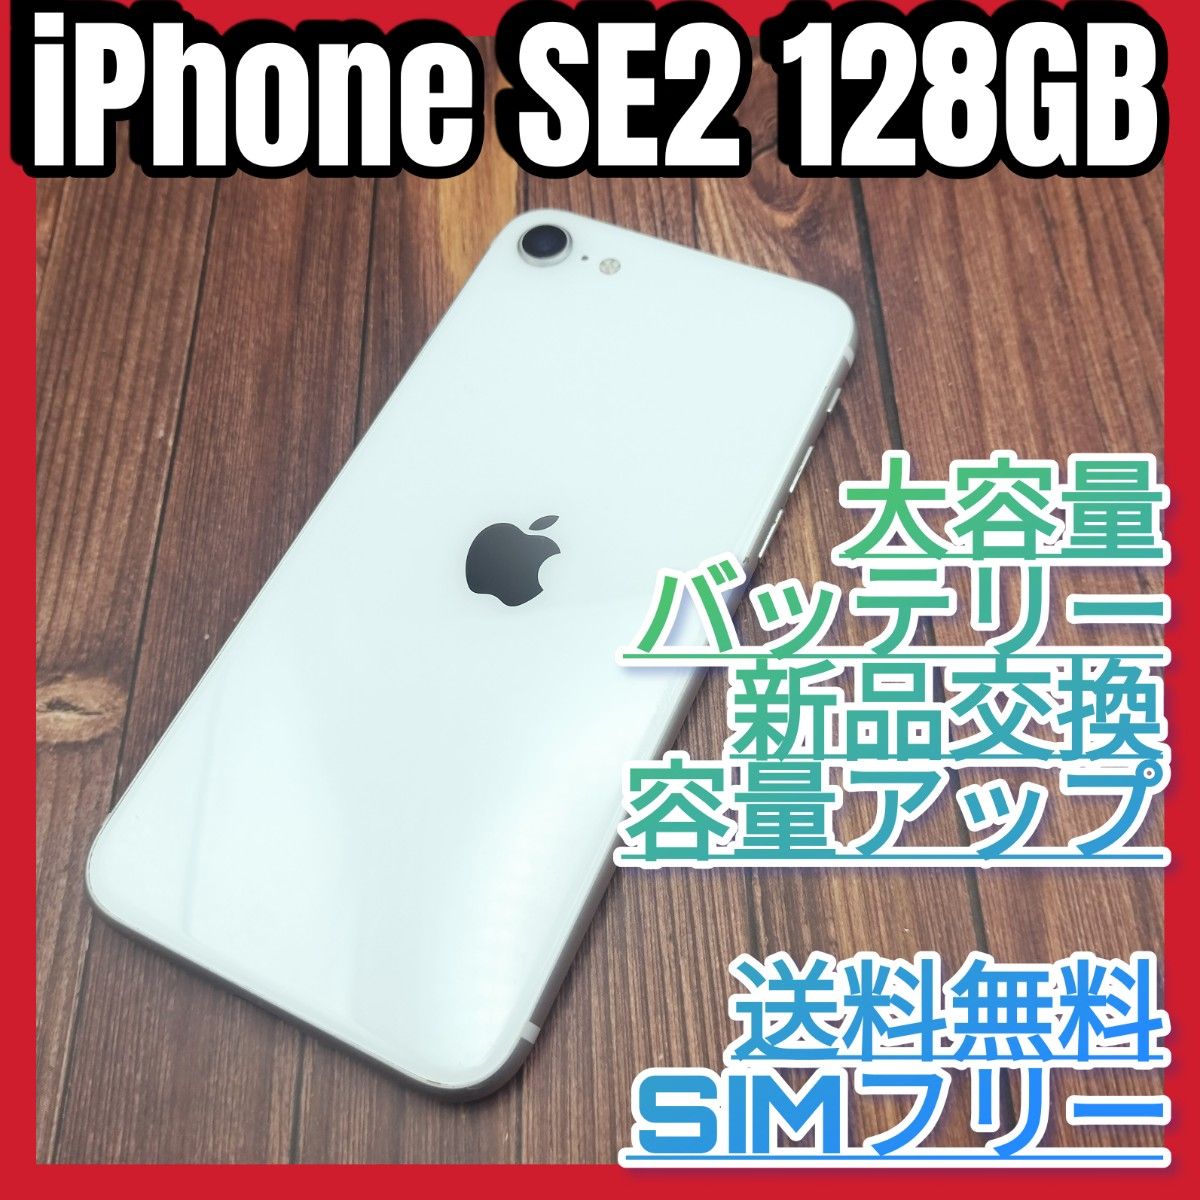 iPhone SE 第2世代 WHITE 128GB 大容量バッテリー新品